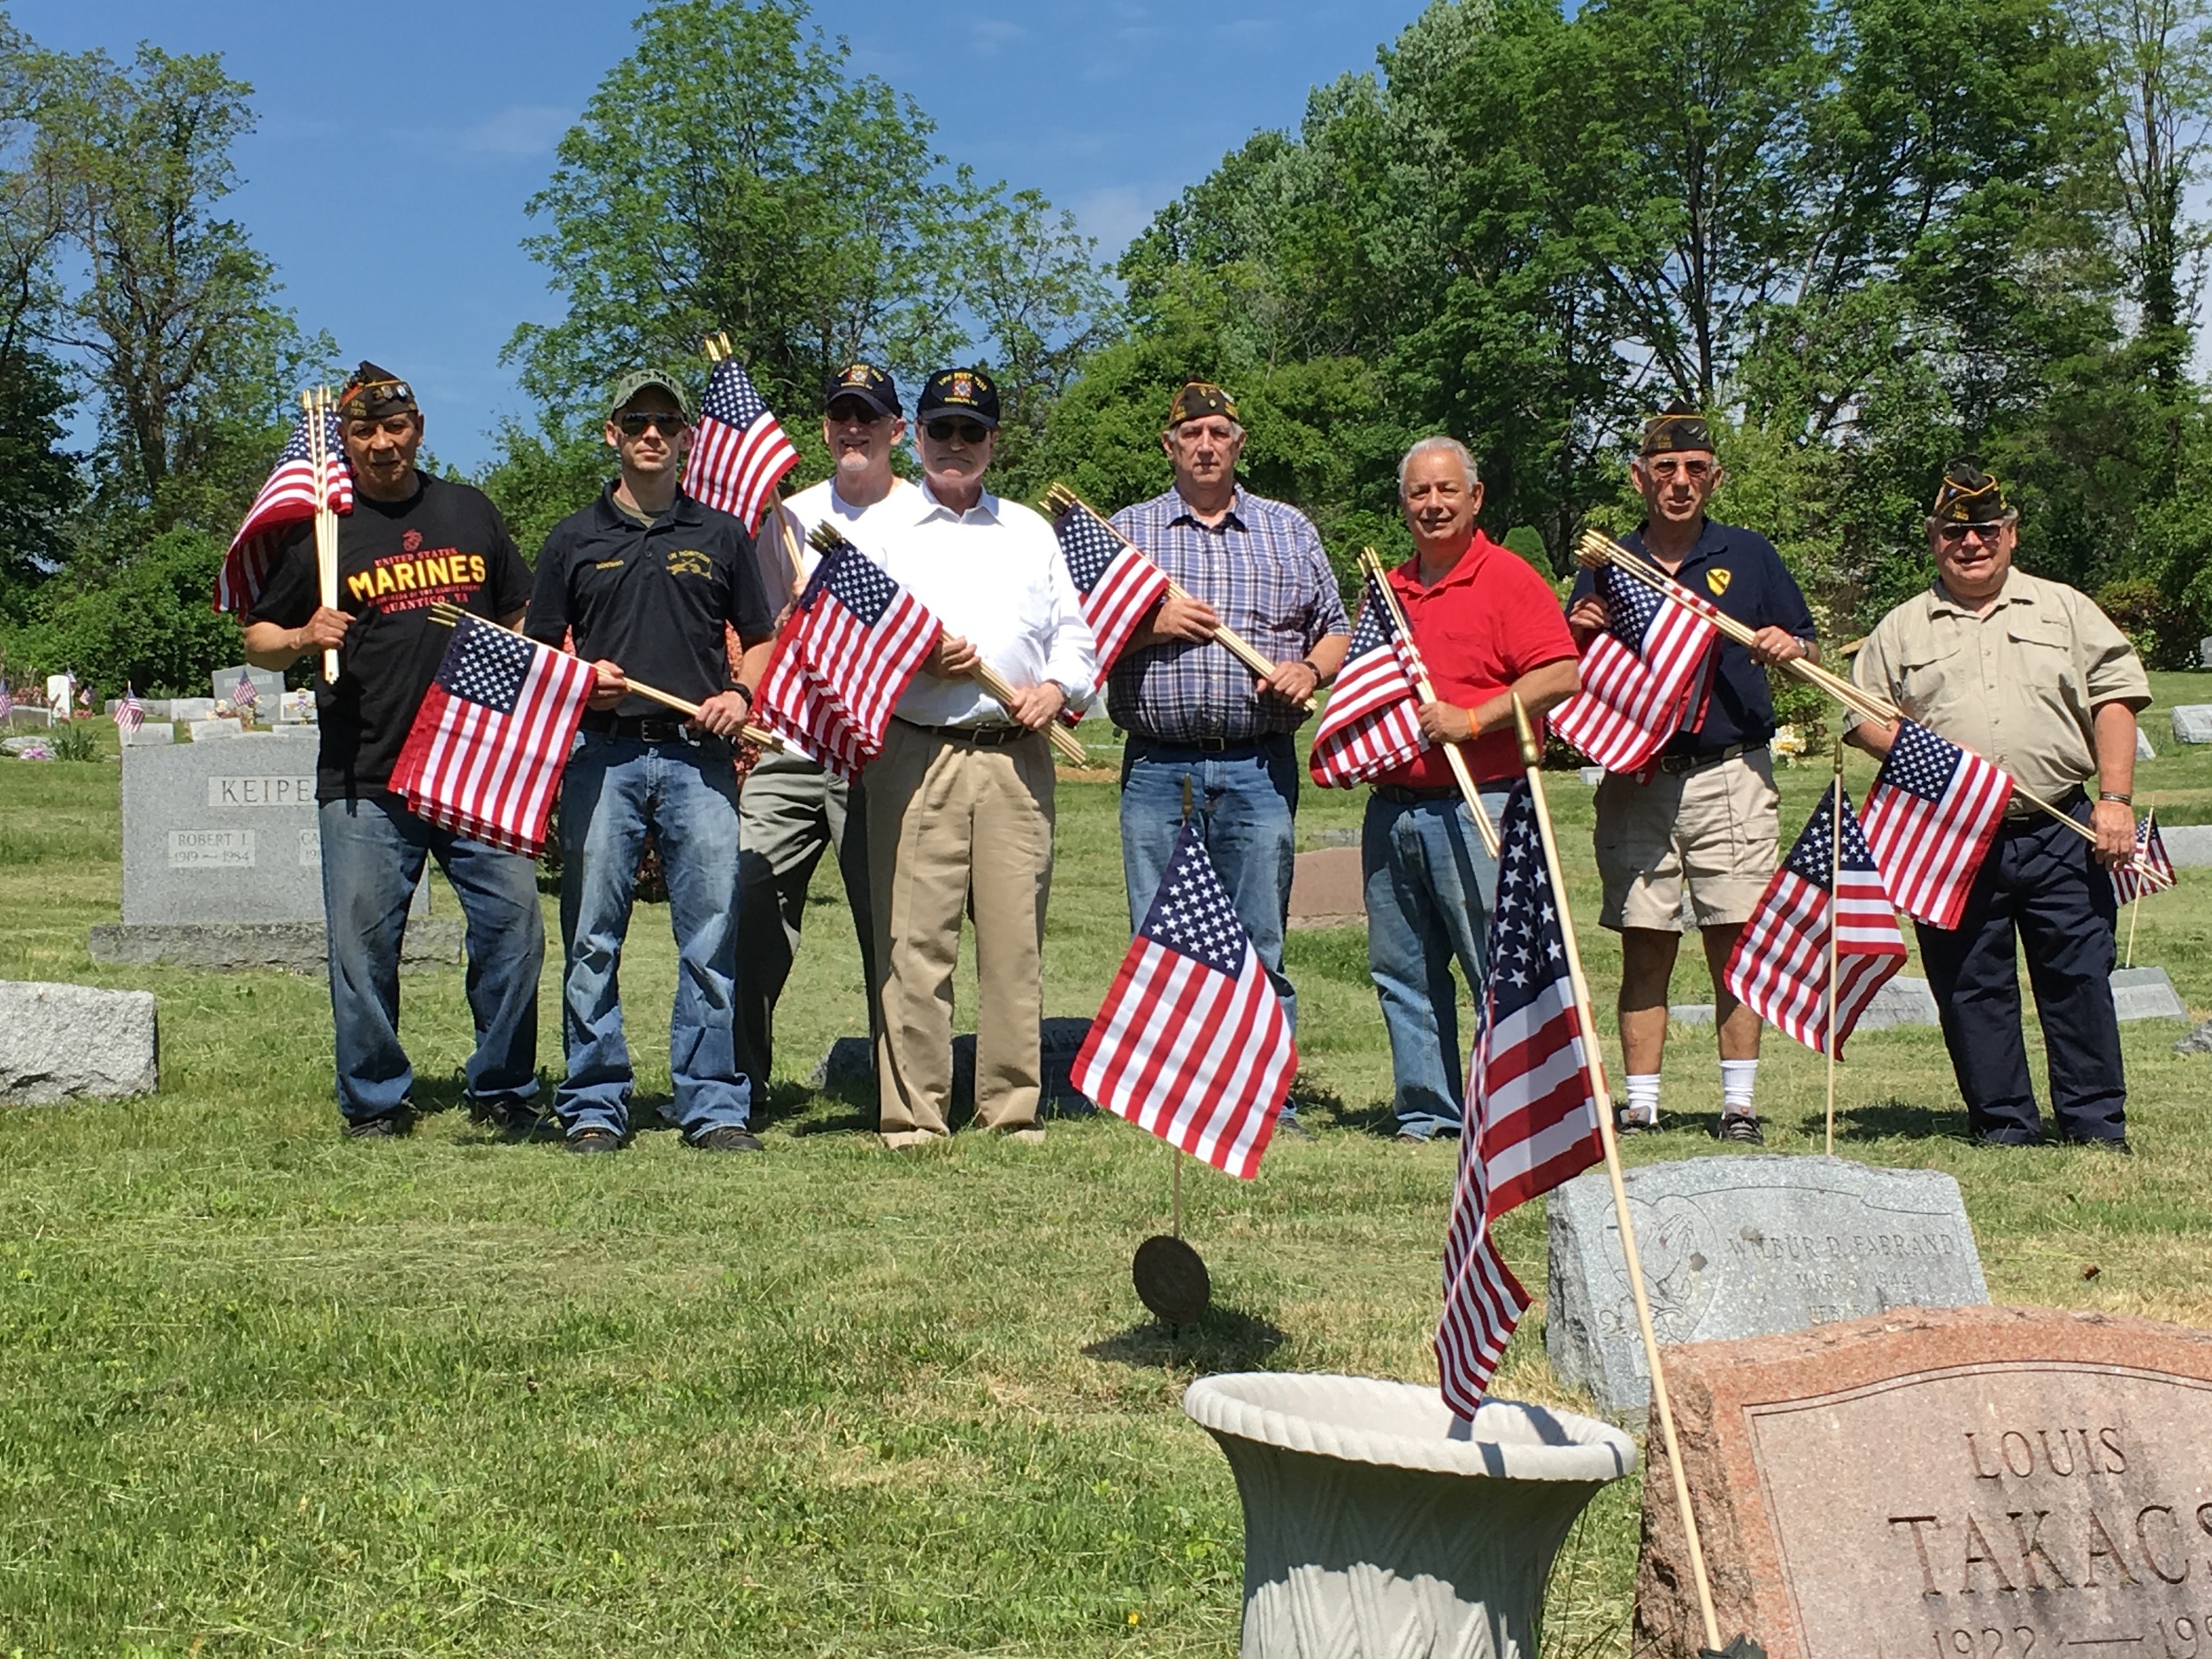  VFW Post 7333 places flags on veteran's graves at six Randolph cemeteries.&nbsp;Participants:&nbsp;Scott Montana -&nbsp;Cmdr,&nbsp;Ted Carman,&nbsp;Bob Brembs,&nbsp;Rich Reck, Dan Gaestel,&nbsp;Bill Menzel, Ken Lareau,&nbsp;Len Labriola,&nbsp;Emerso